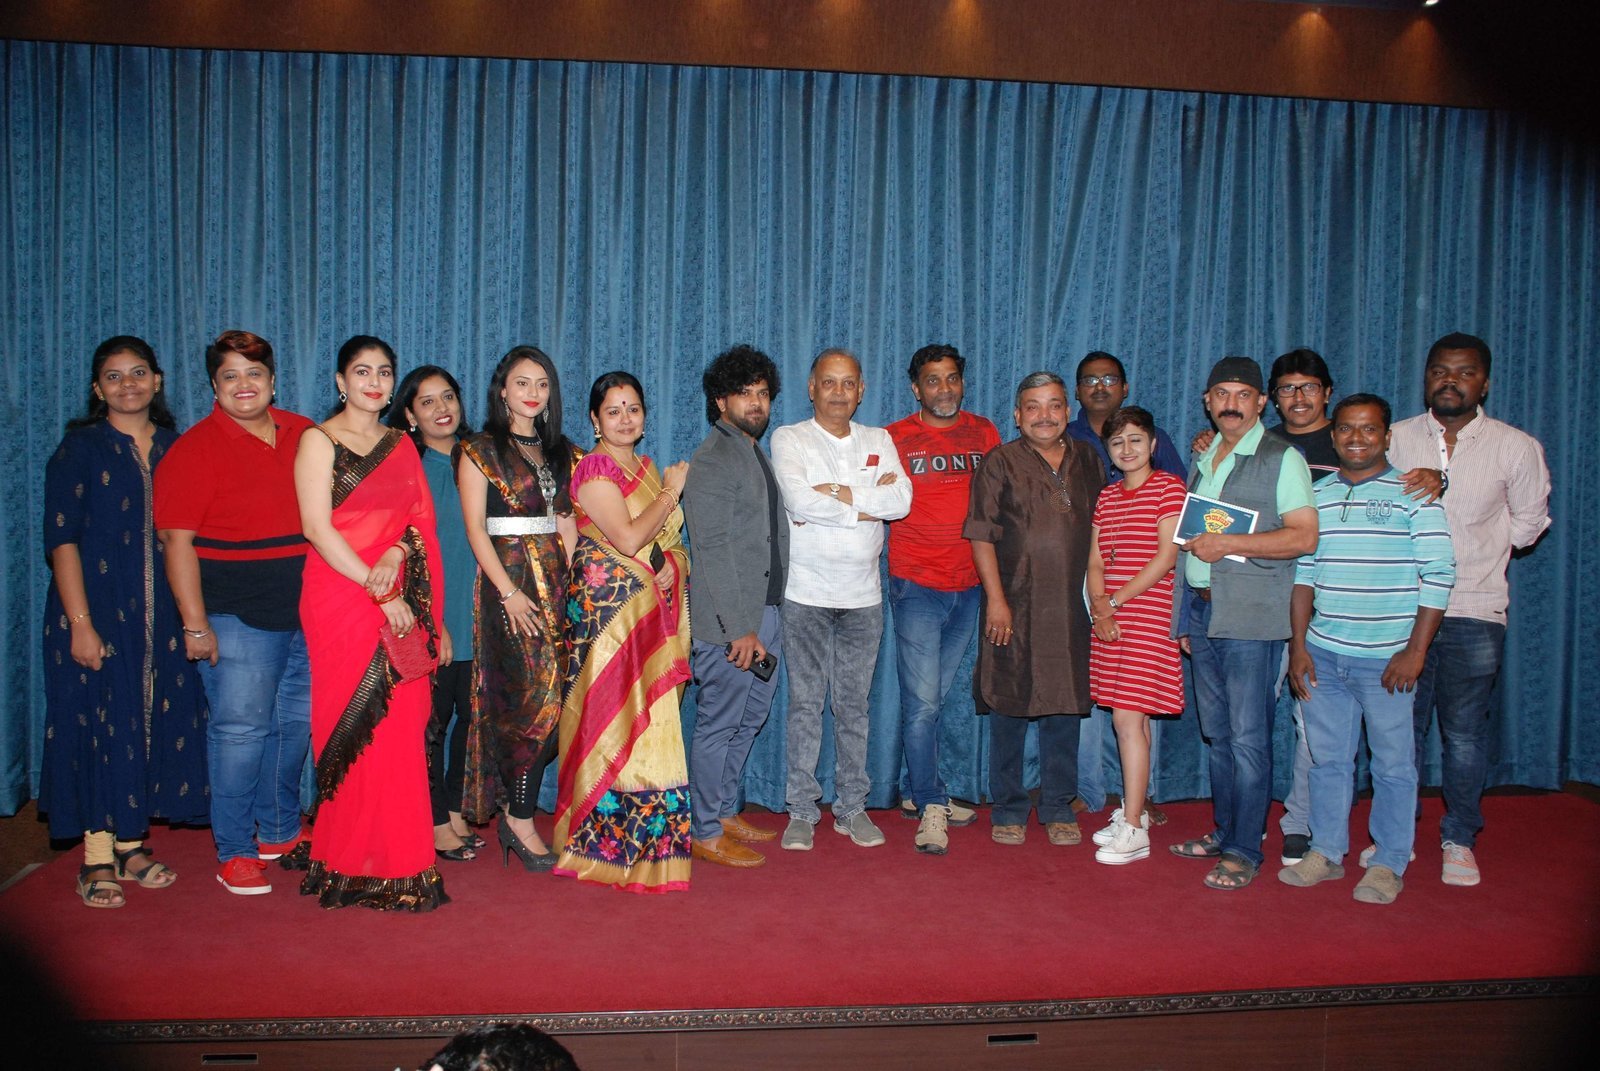 Ondu Ganteya Kathe Film Teaser Release Photos | Picture 1723819